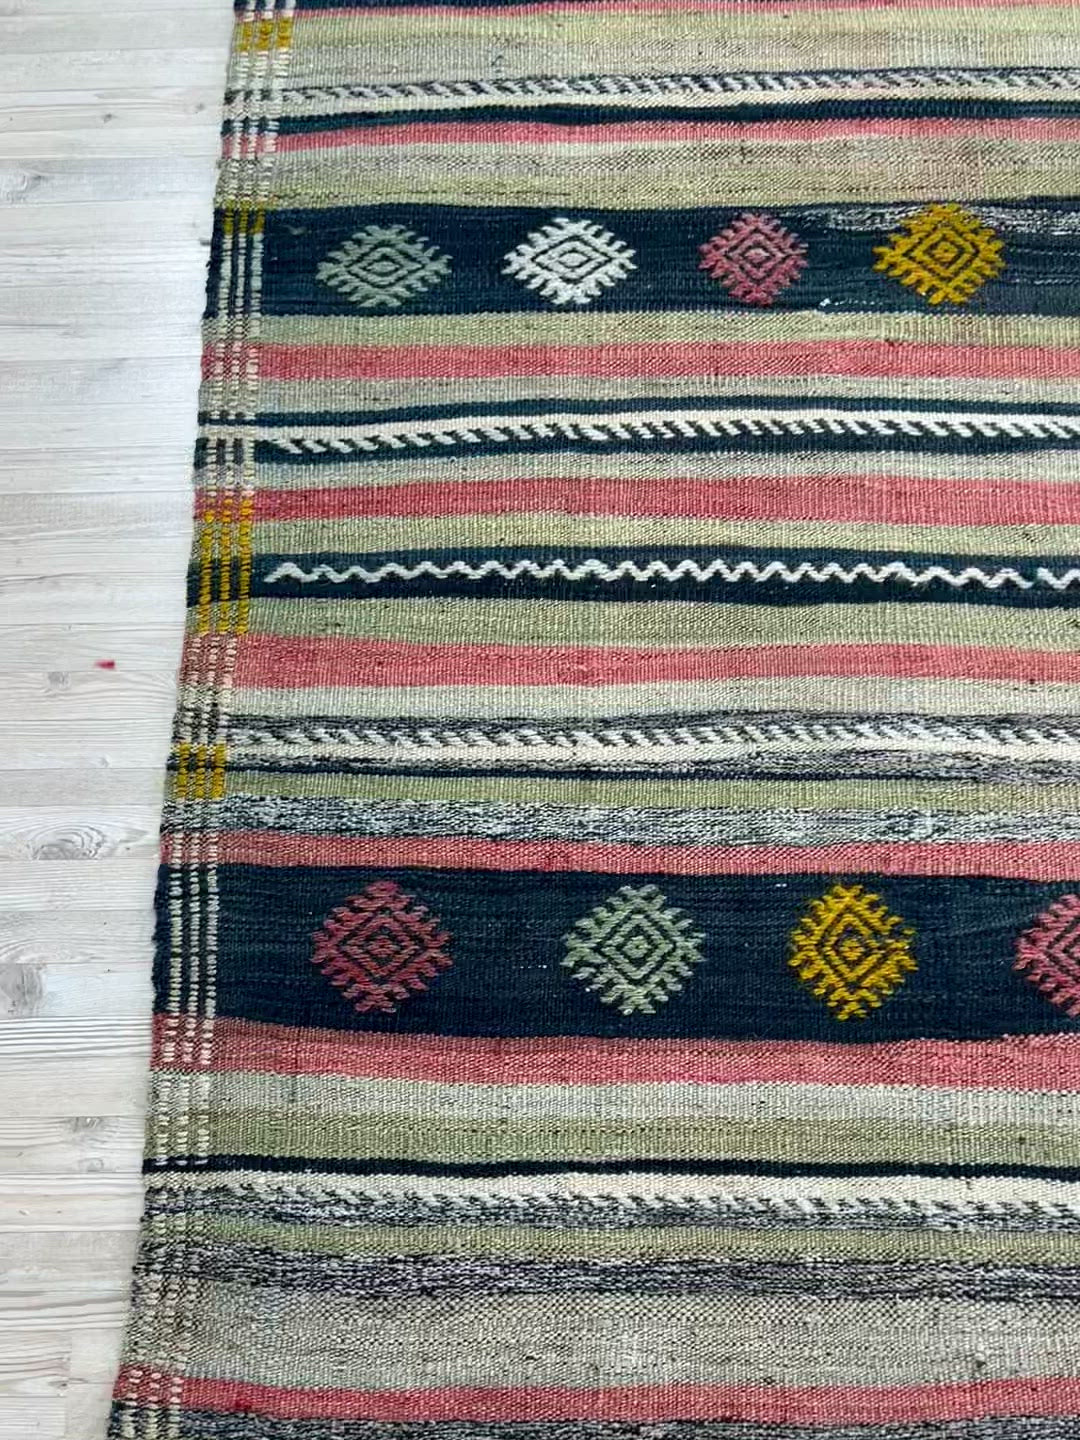 malatya turkish kilim vintage rug shop palo alto oriental rugs san franciaco nbay area berkeley buy rug online california rug shopping